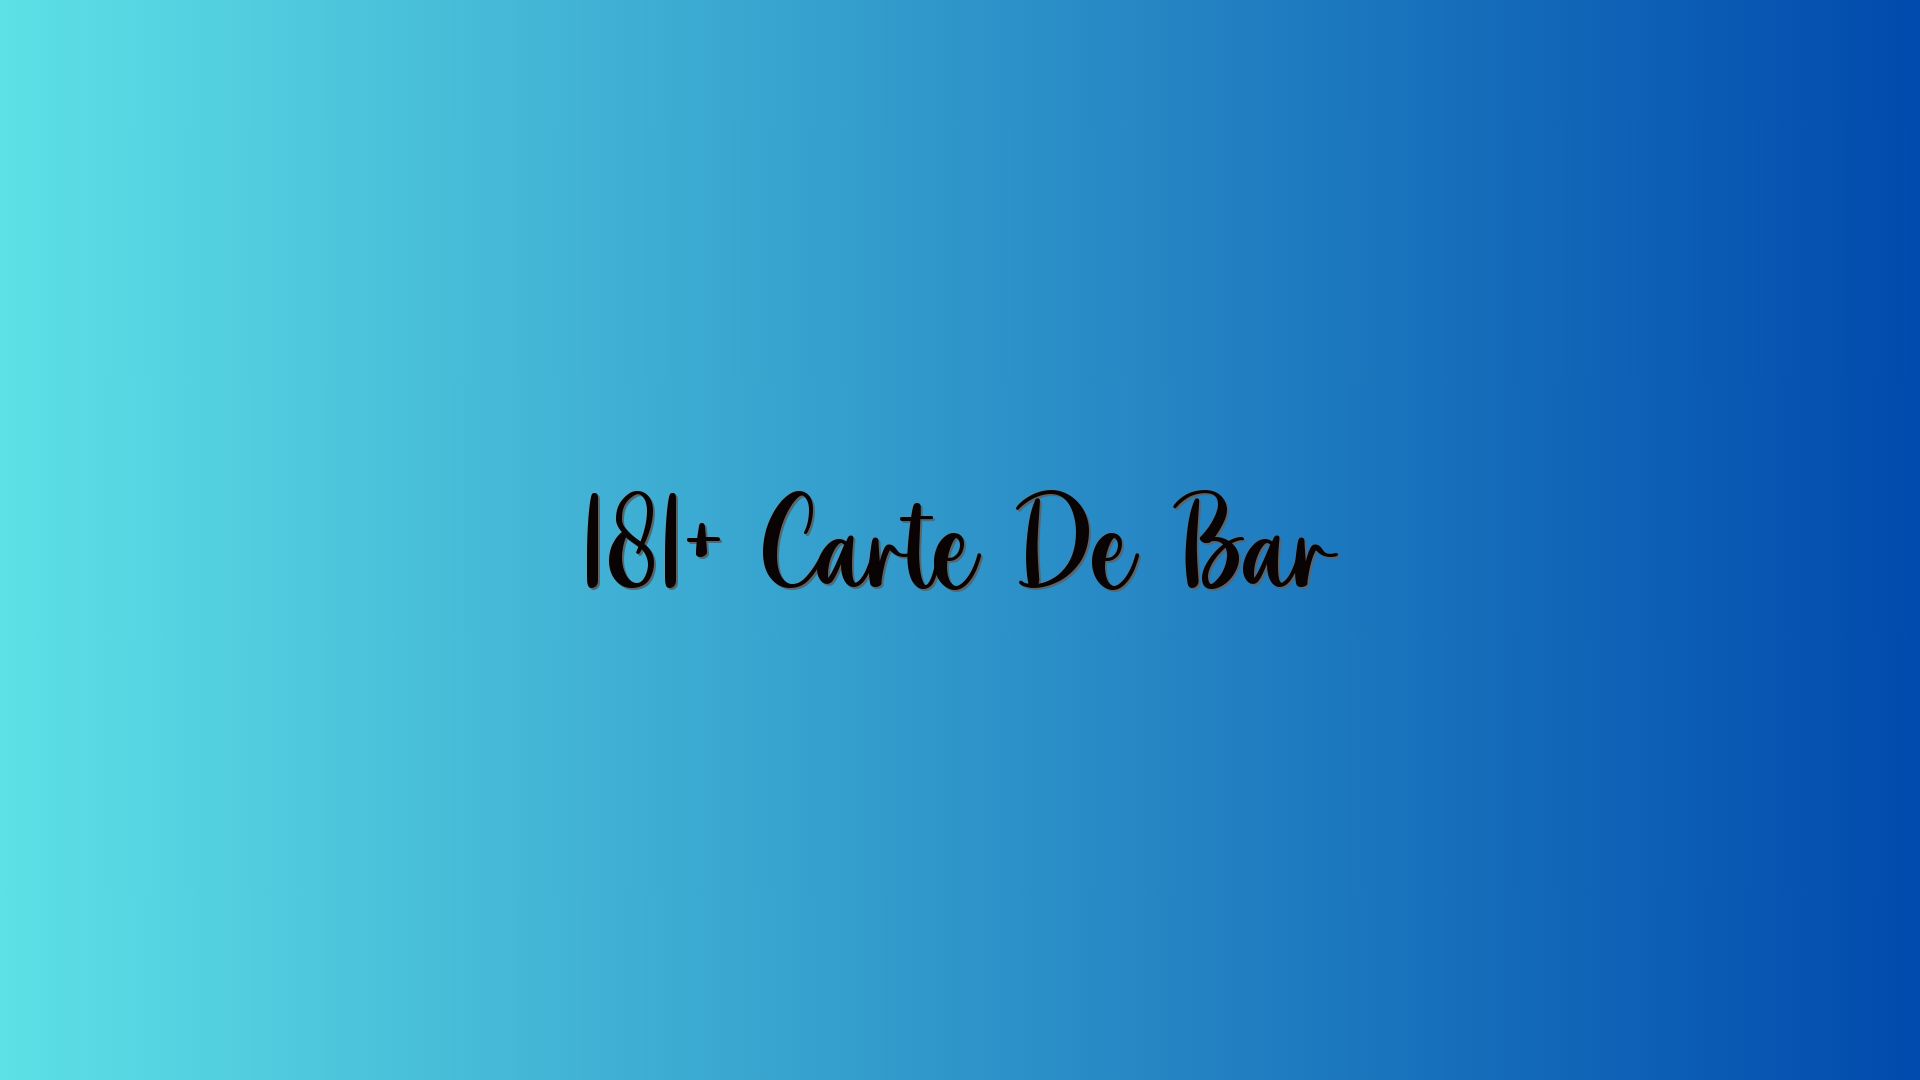 181+ Carte De Bar